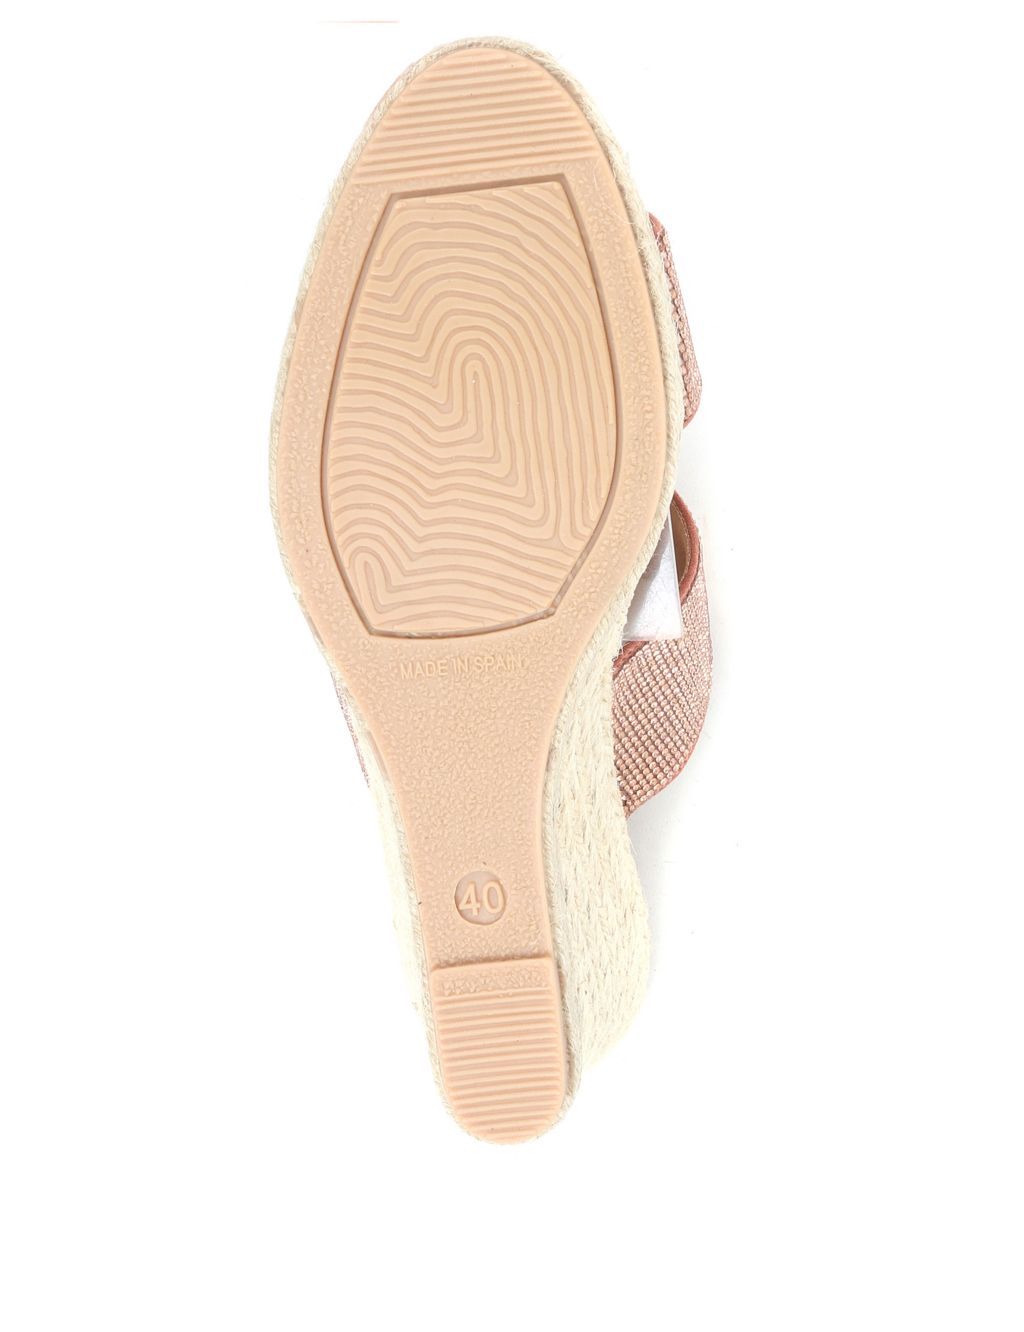 Leather Wedge Heel Espadrille Sandals image 6